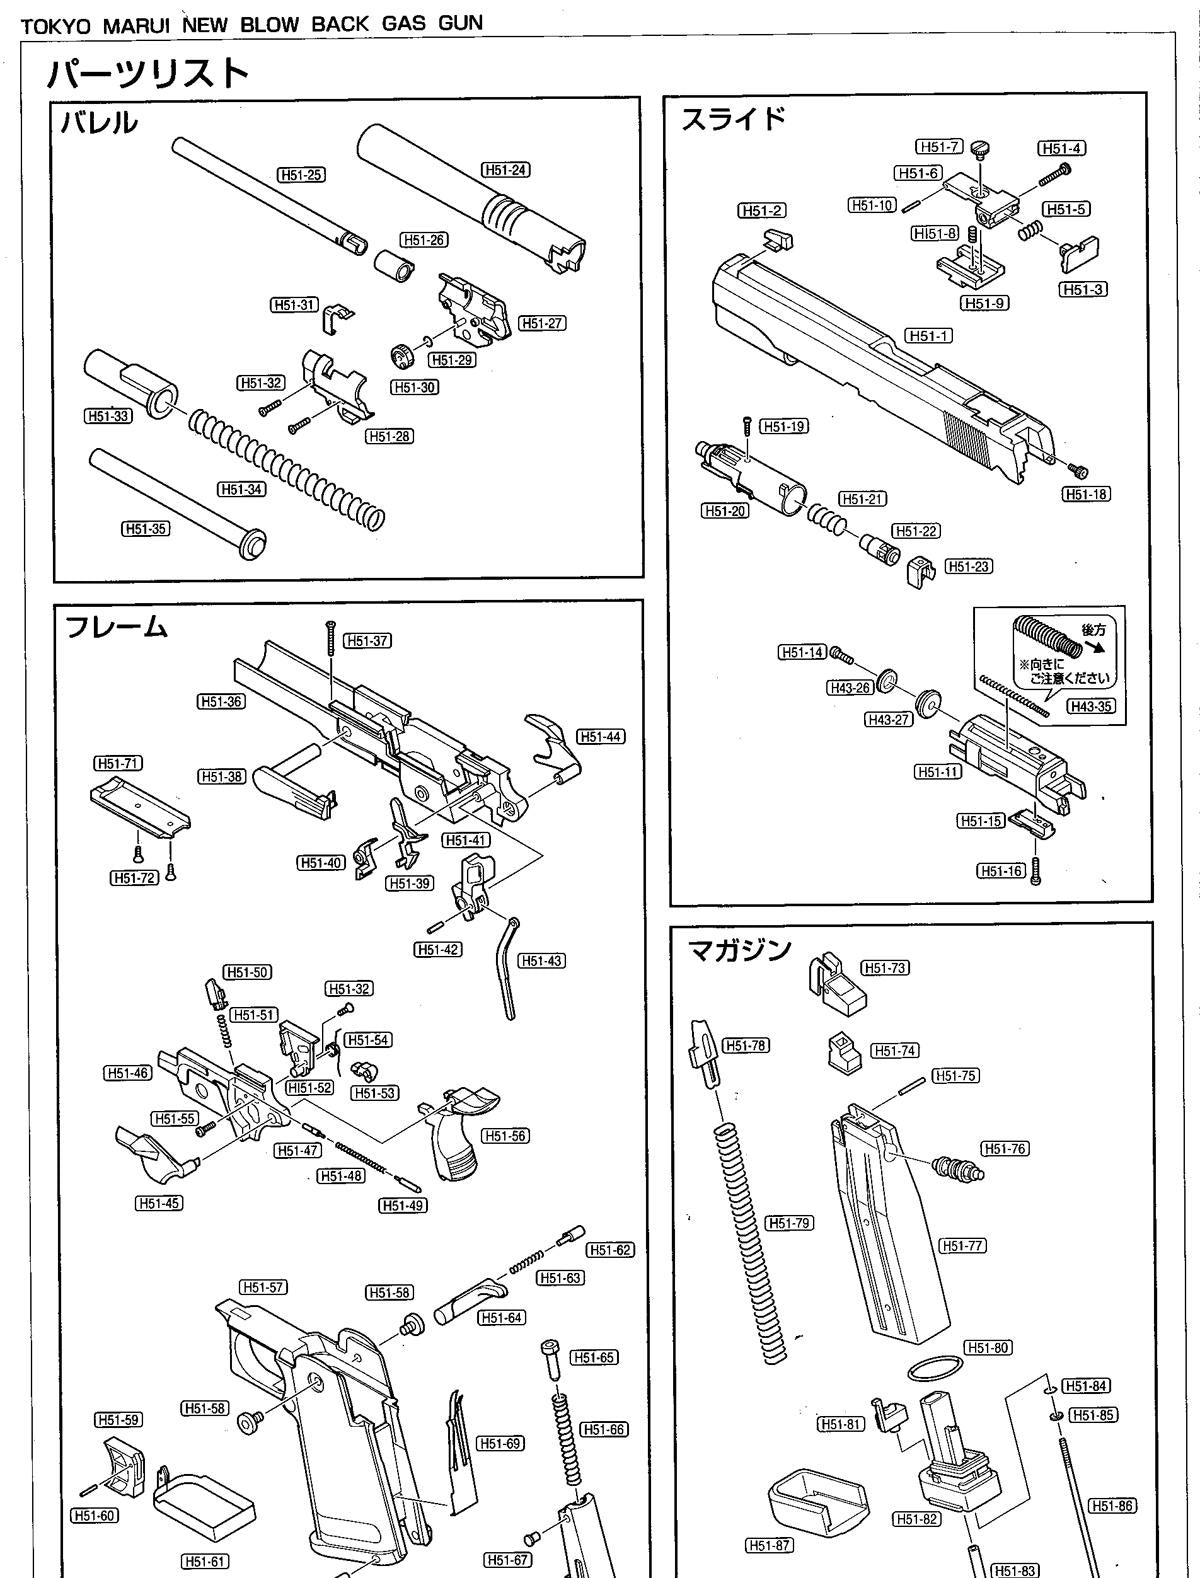 Tokyo Marui Hi-Capa - Replacement Part H51-75 - Feed Lips Pin